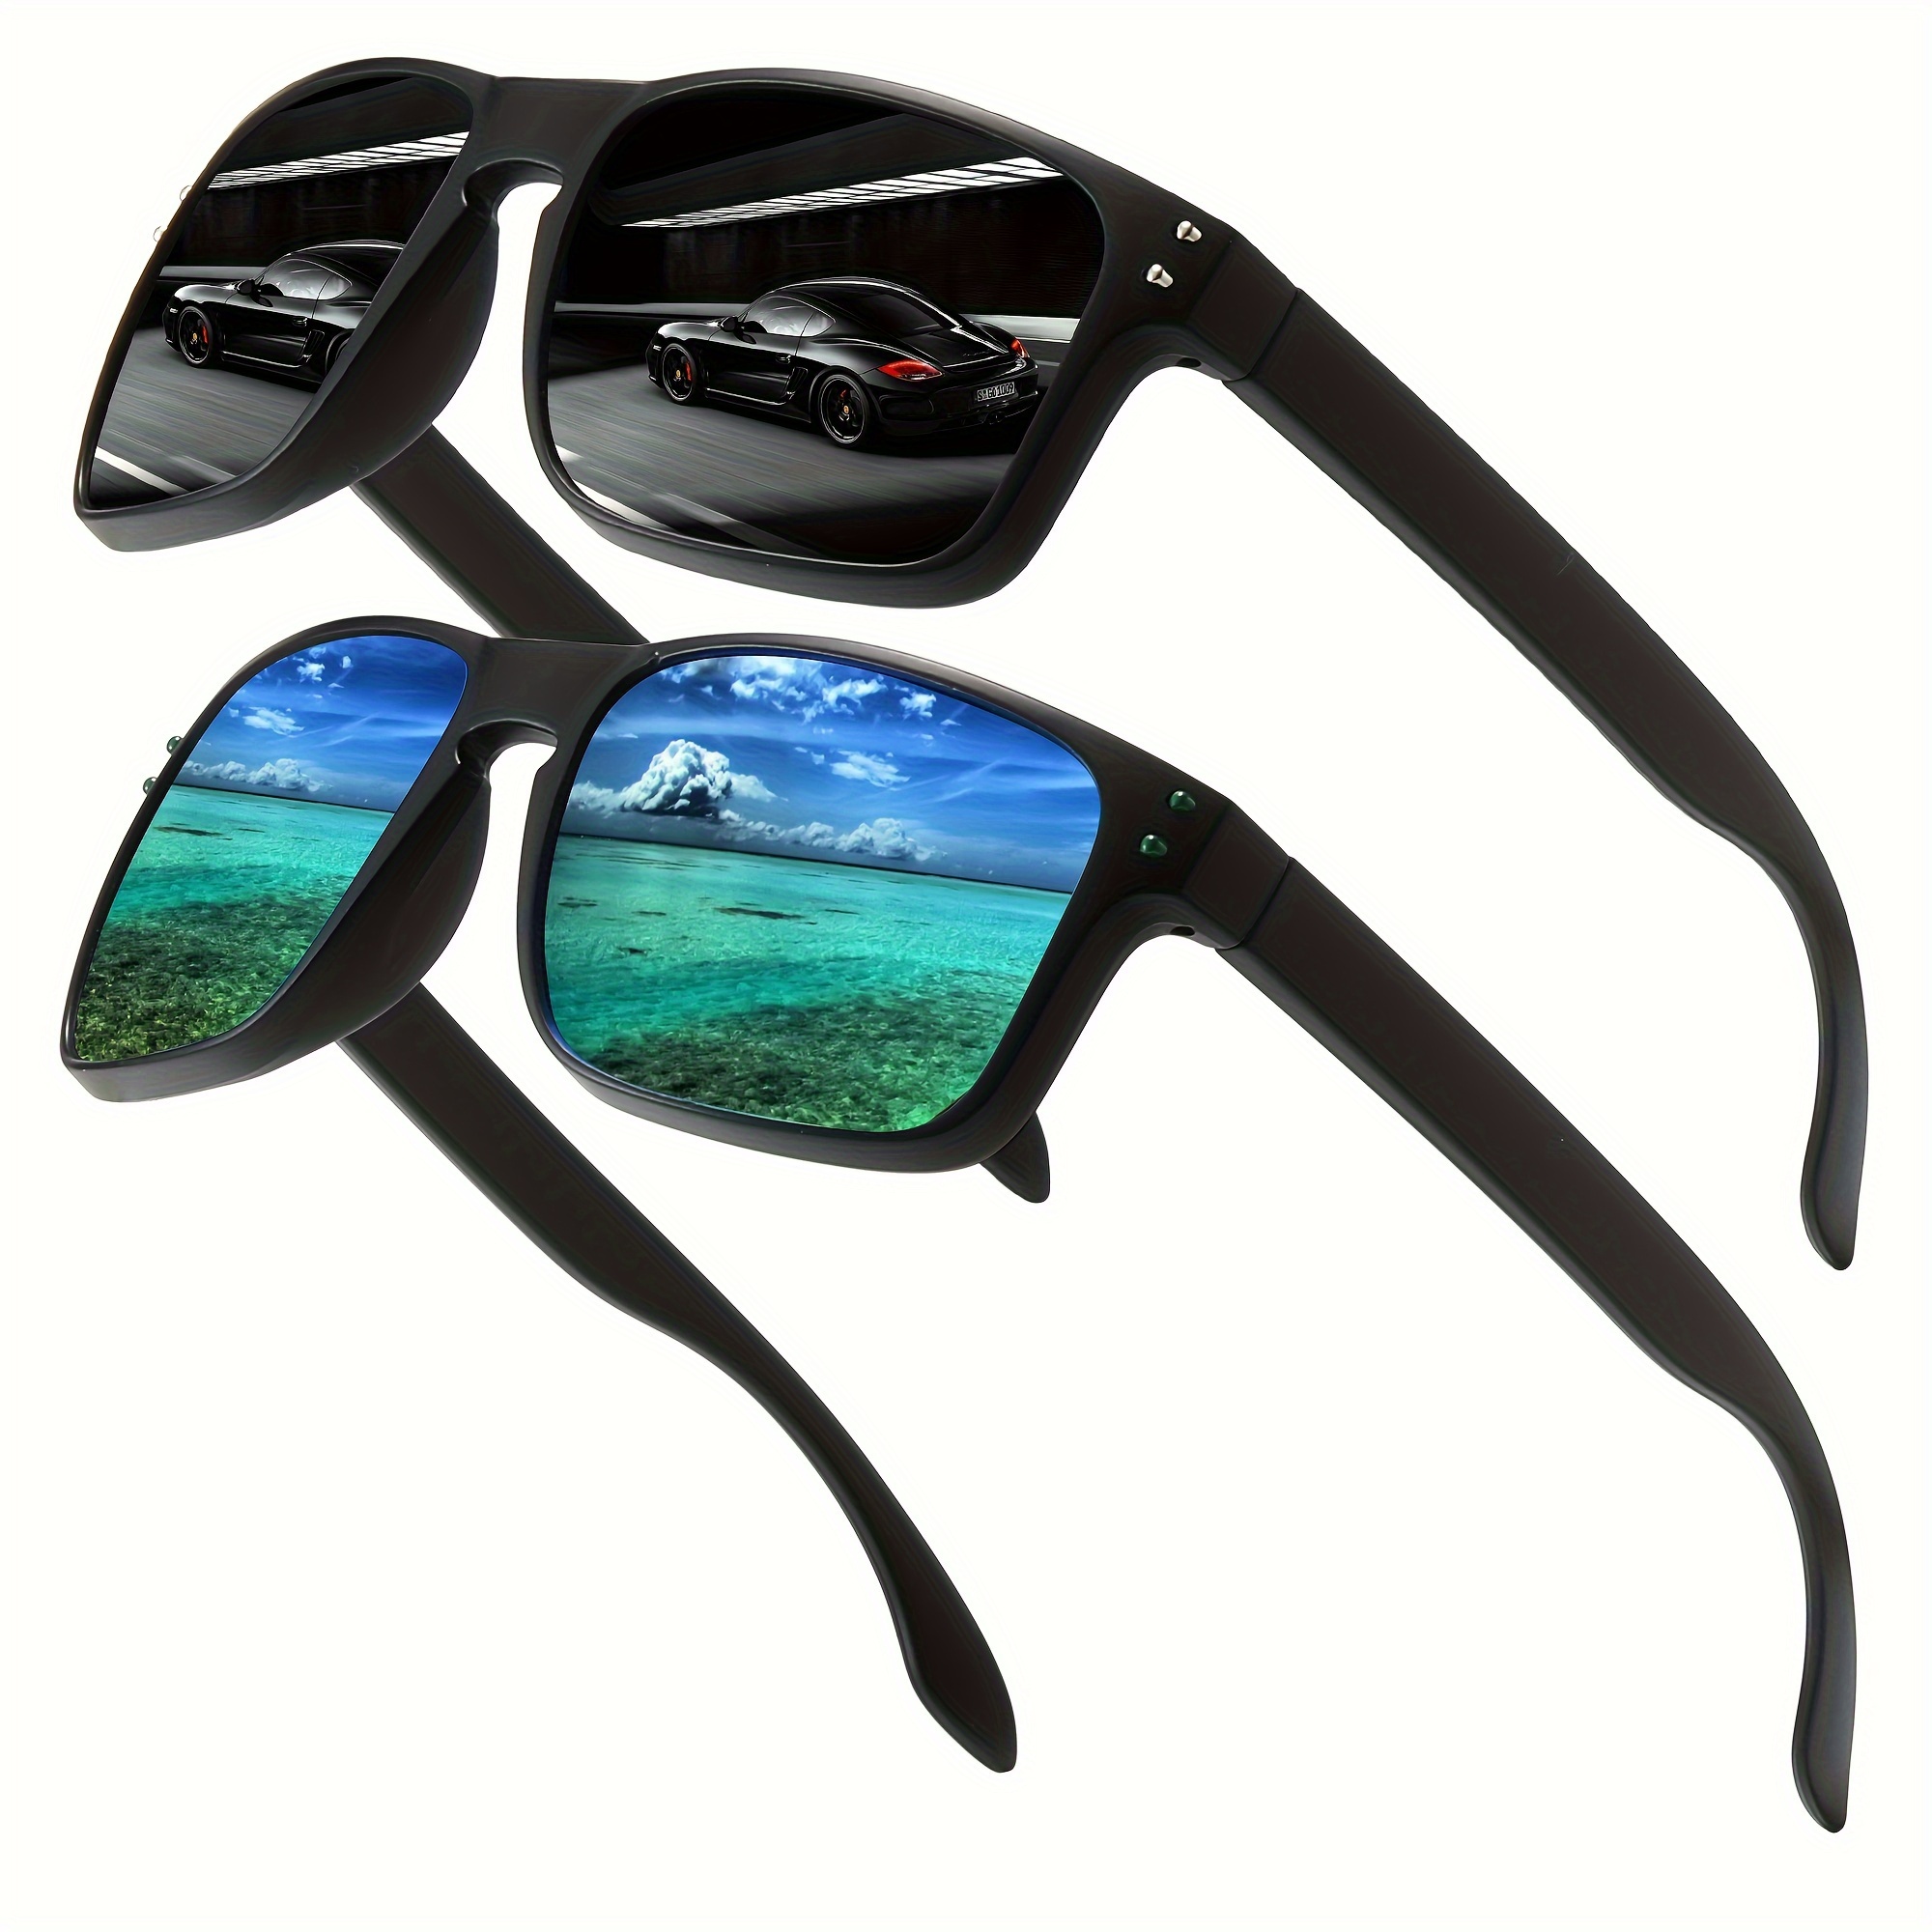 Men's Polarized Sunglasses Outdoor Sports Cycling Sunglasses Driver Driving Fishing Glasses UV400, Sunglasses For Men,Sunglasses Men Polarized,Sun